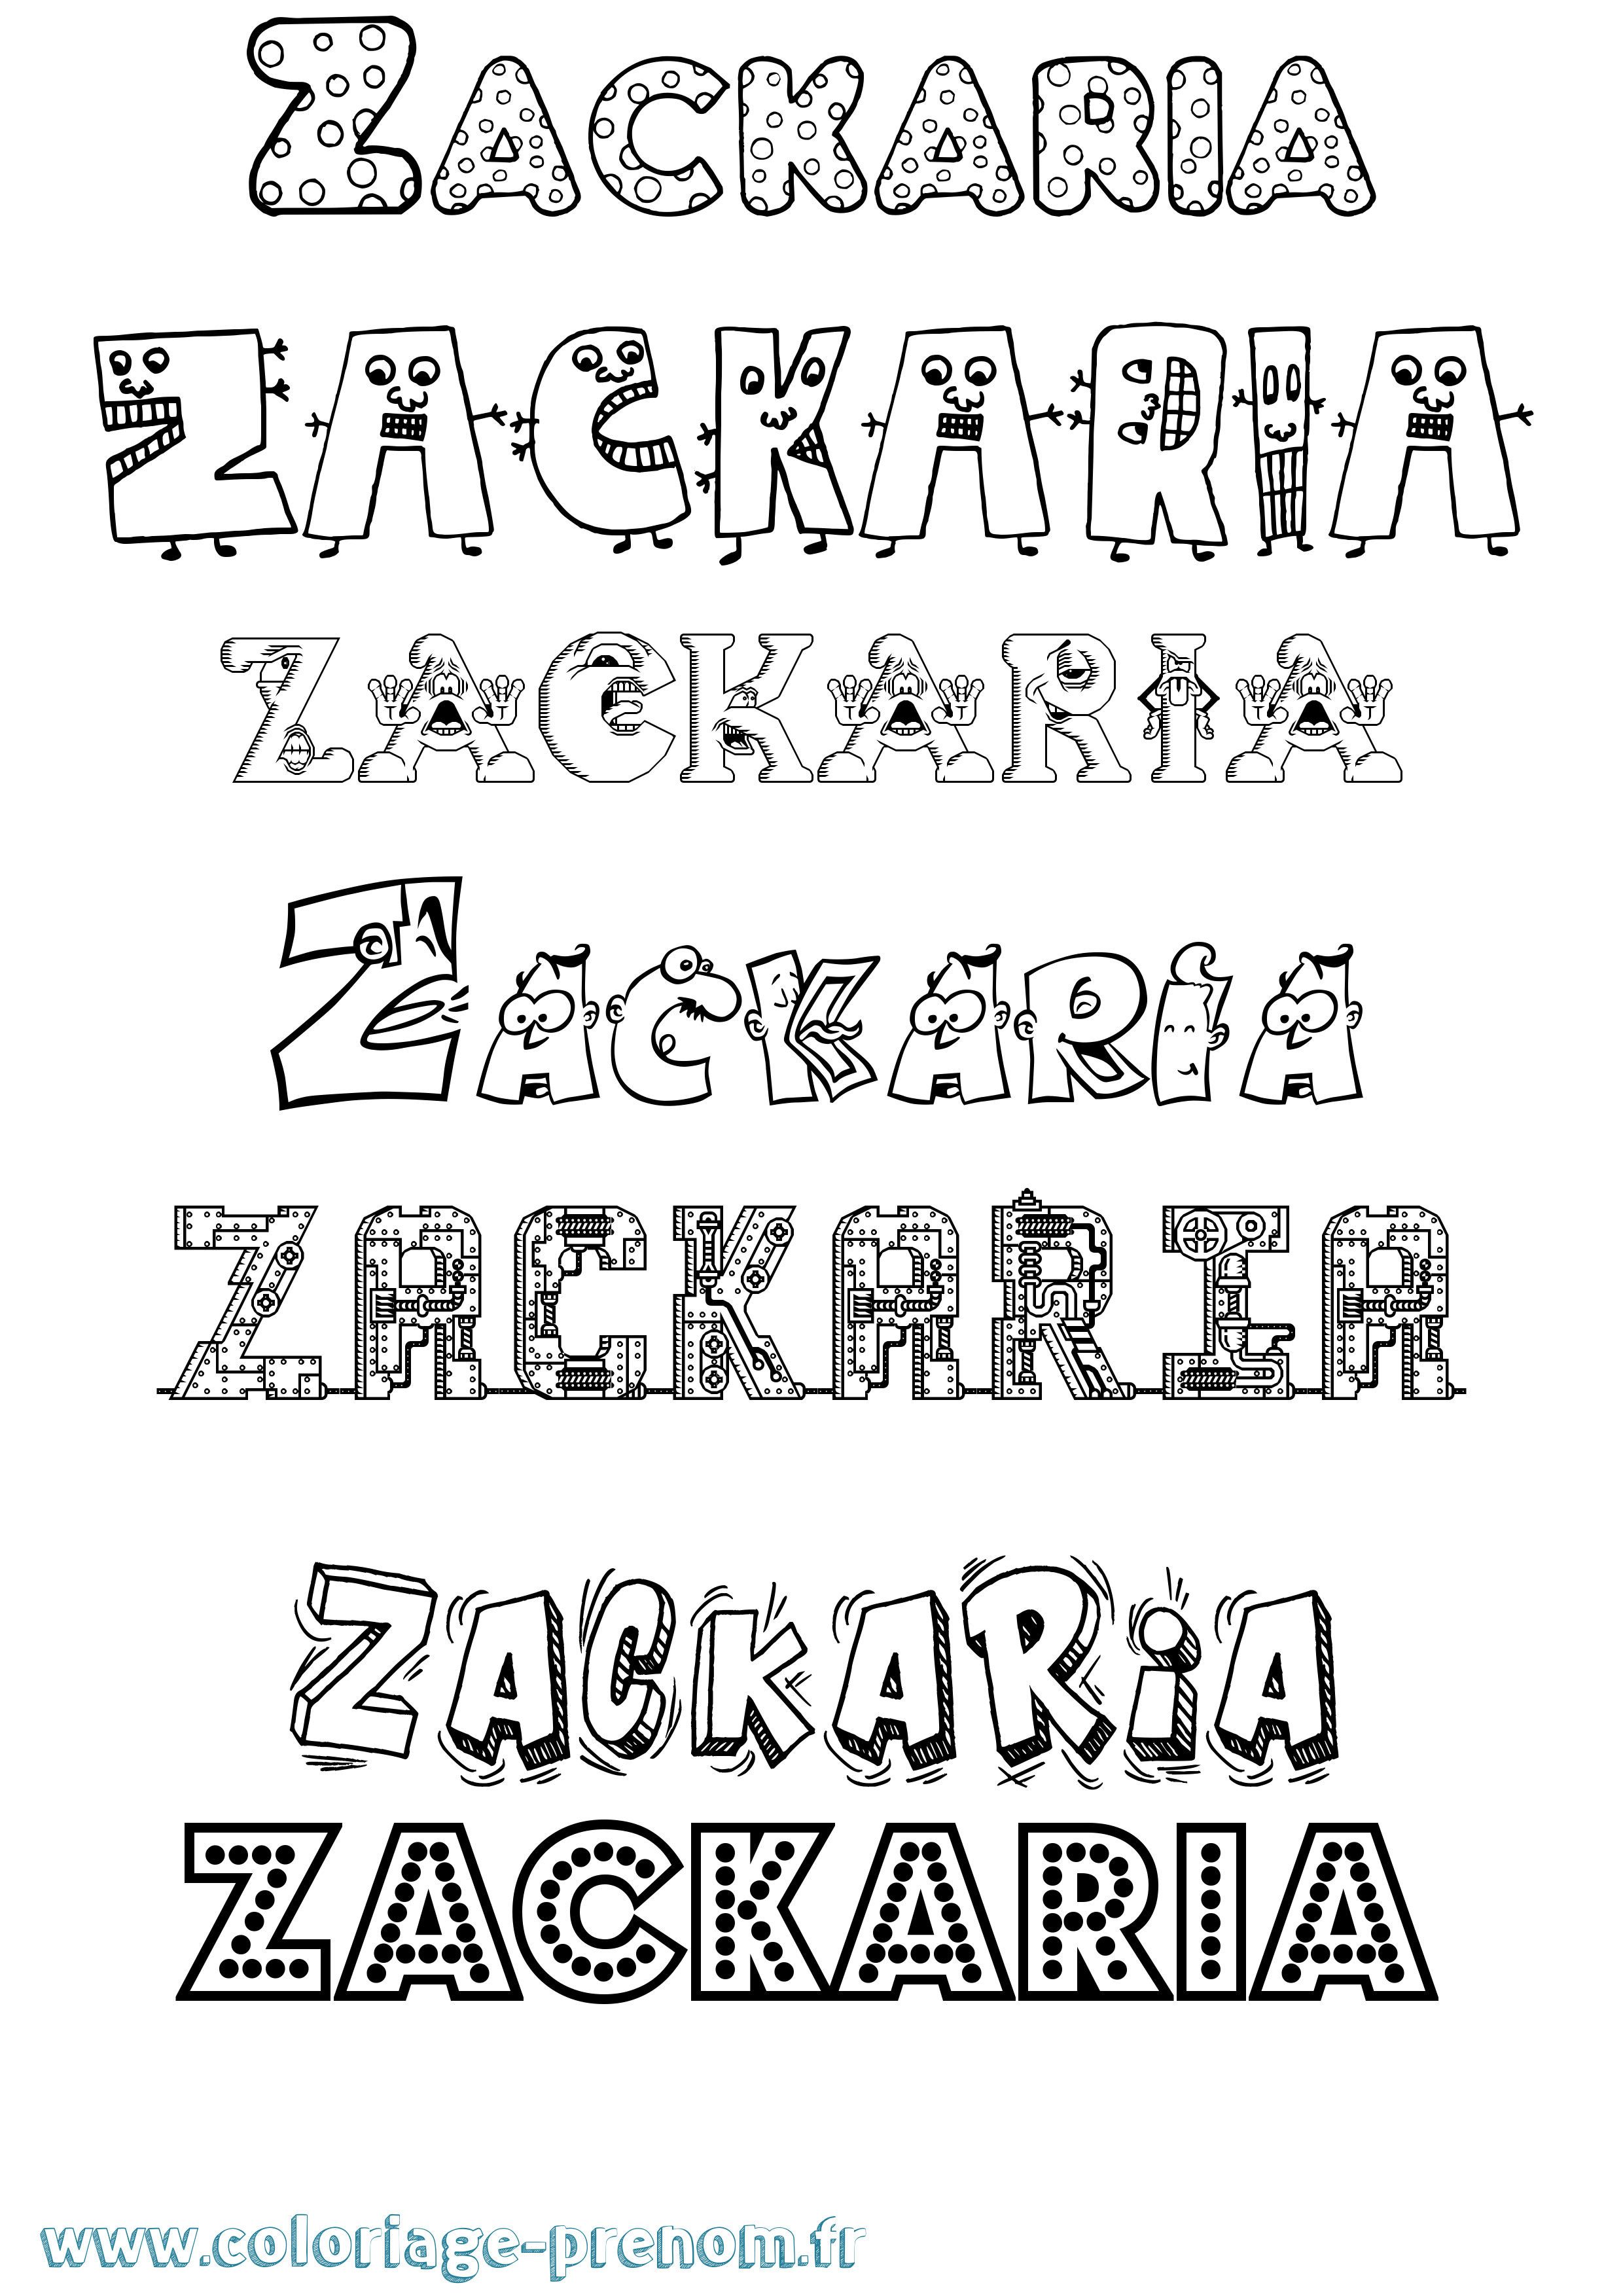 Coloriage prénom Zackaria Fun